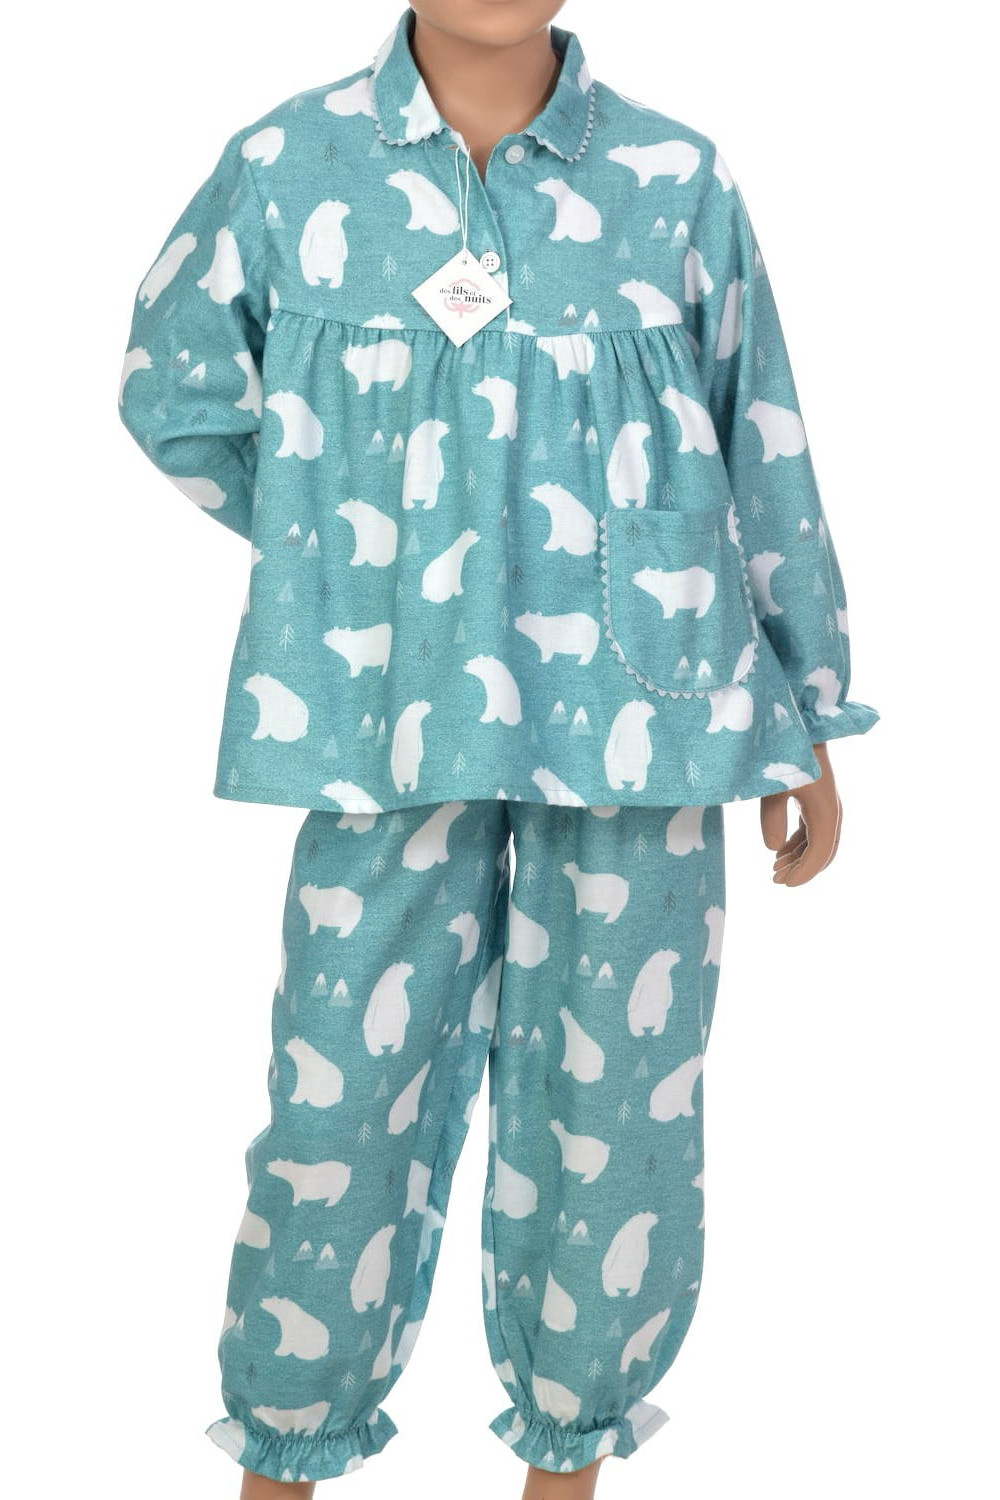 Pyjama pilou pilou vert avec poches pour fille - Pyjama D'Or